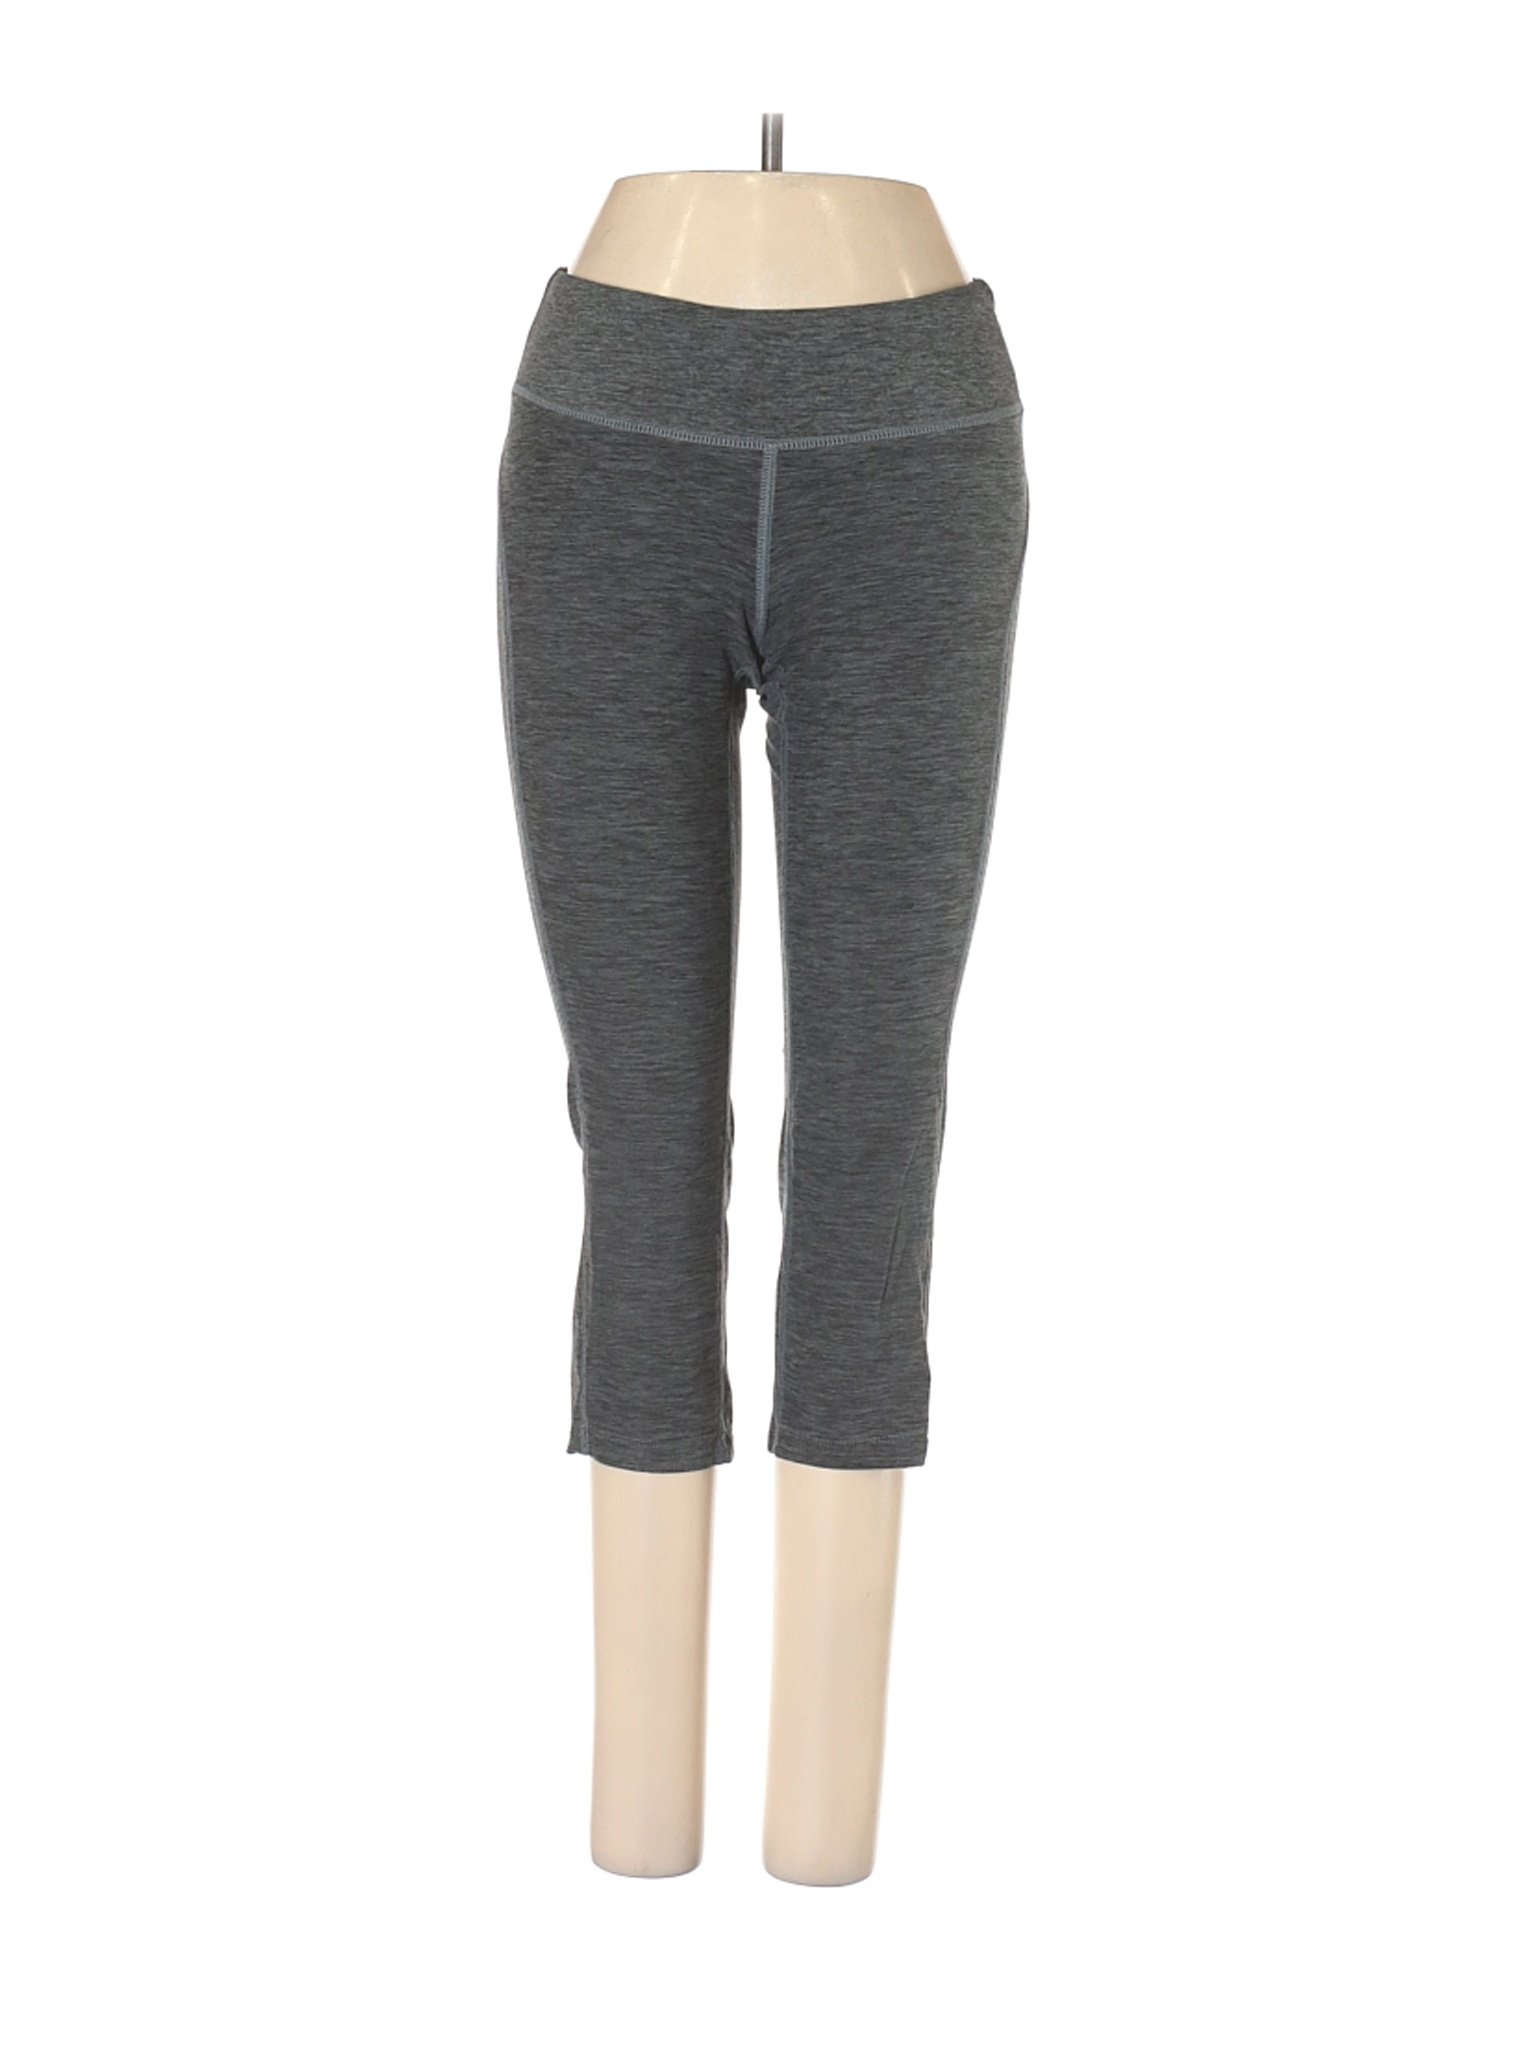 New Balance Women Gray Active Pants S | eBay